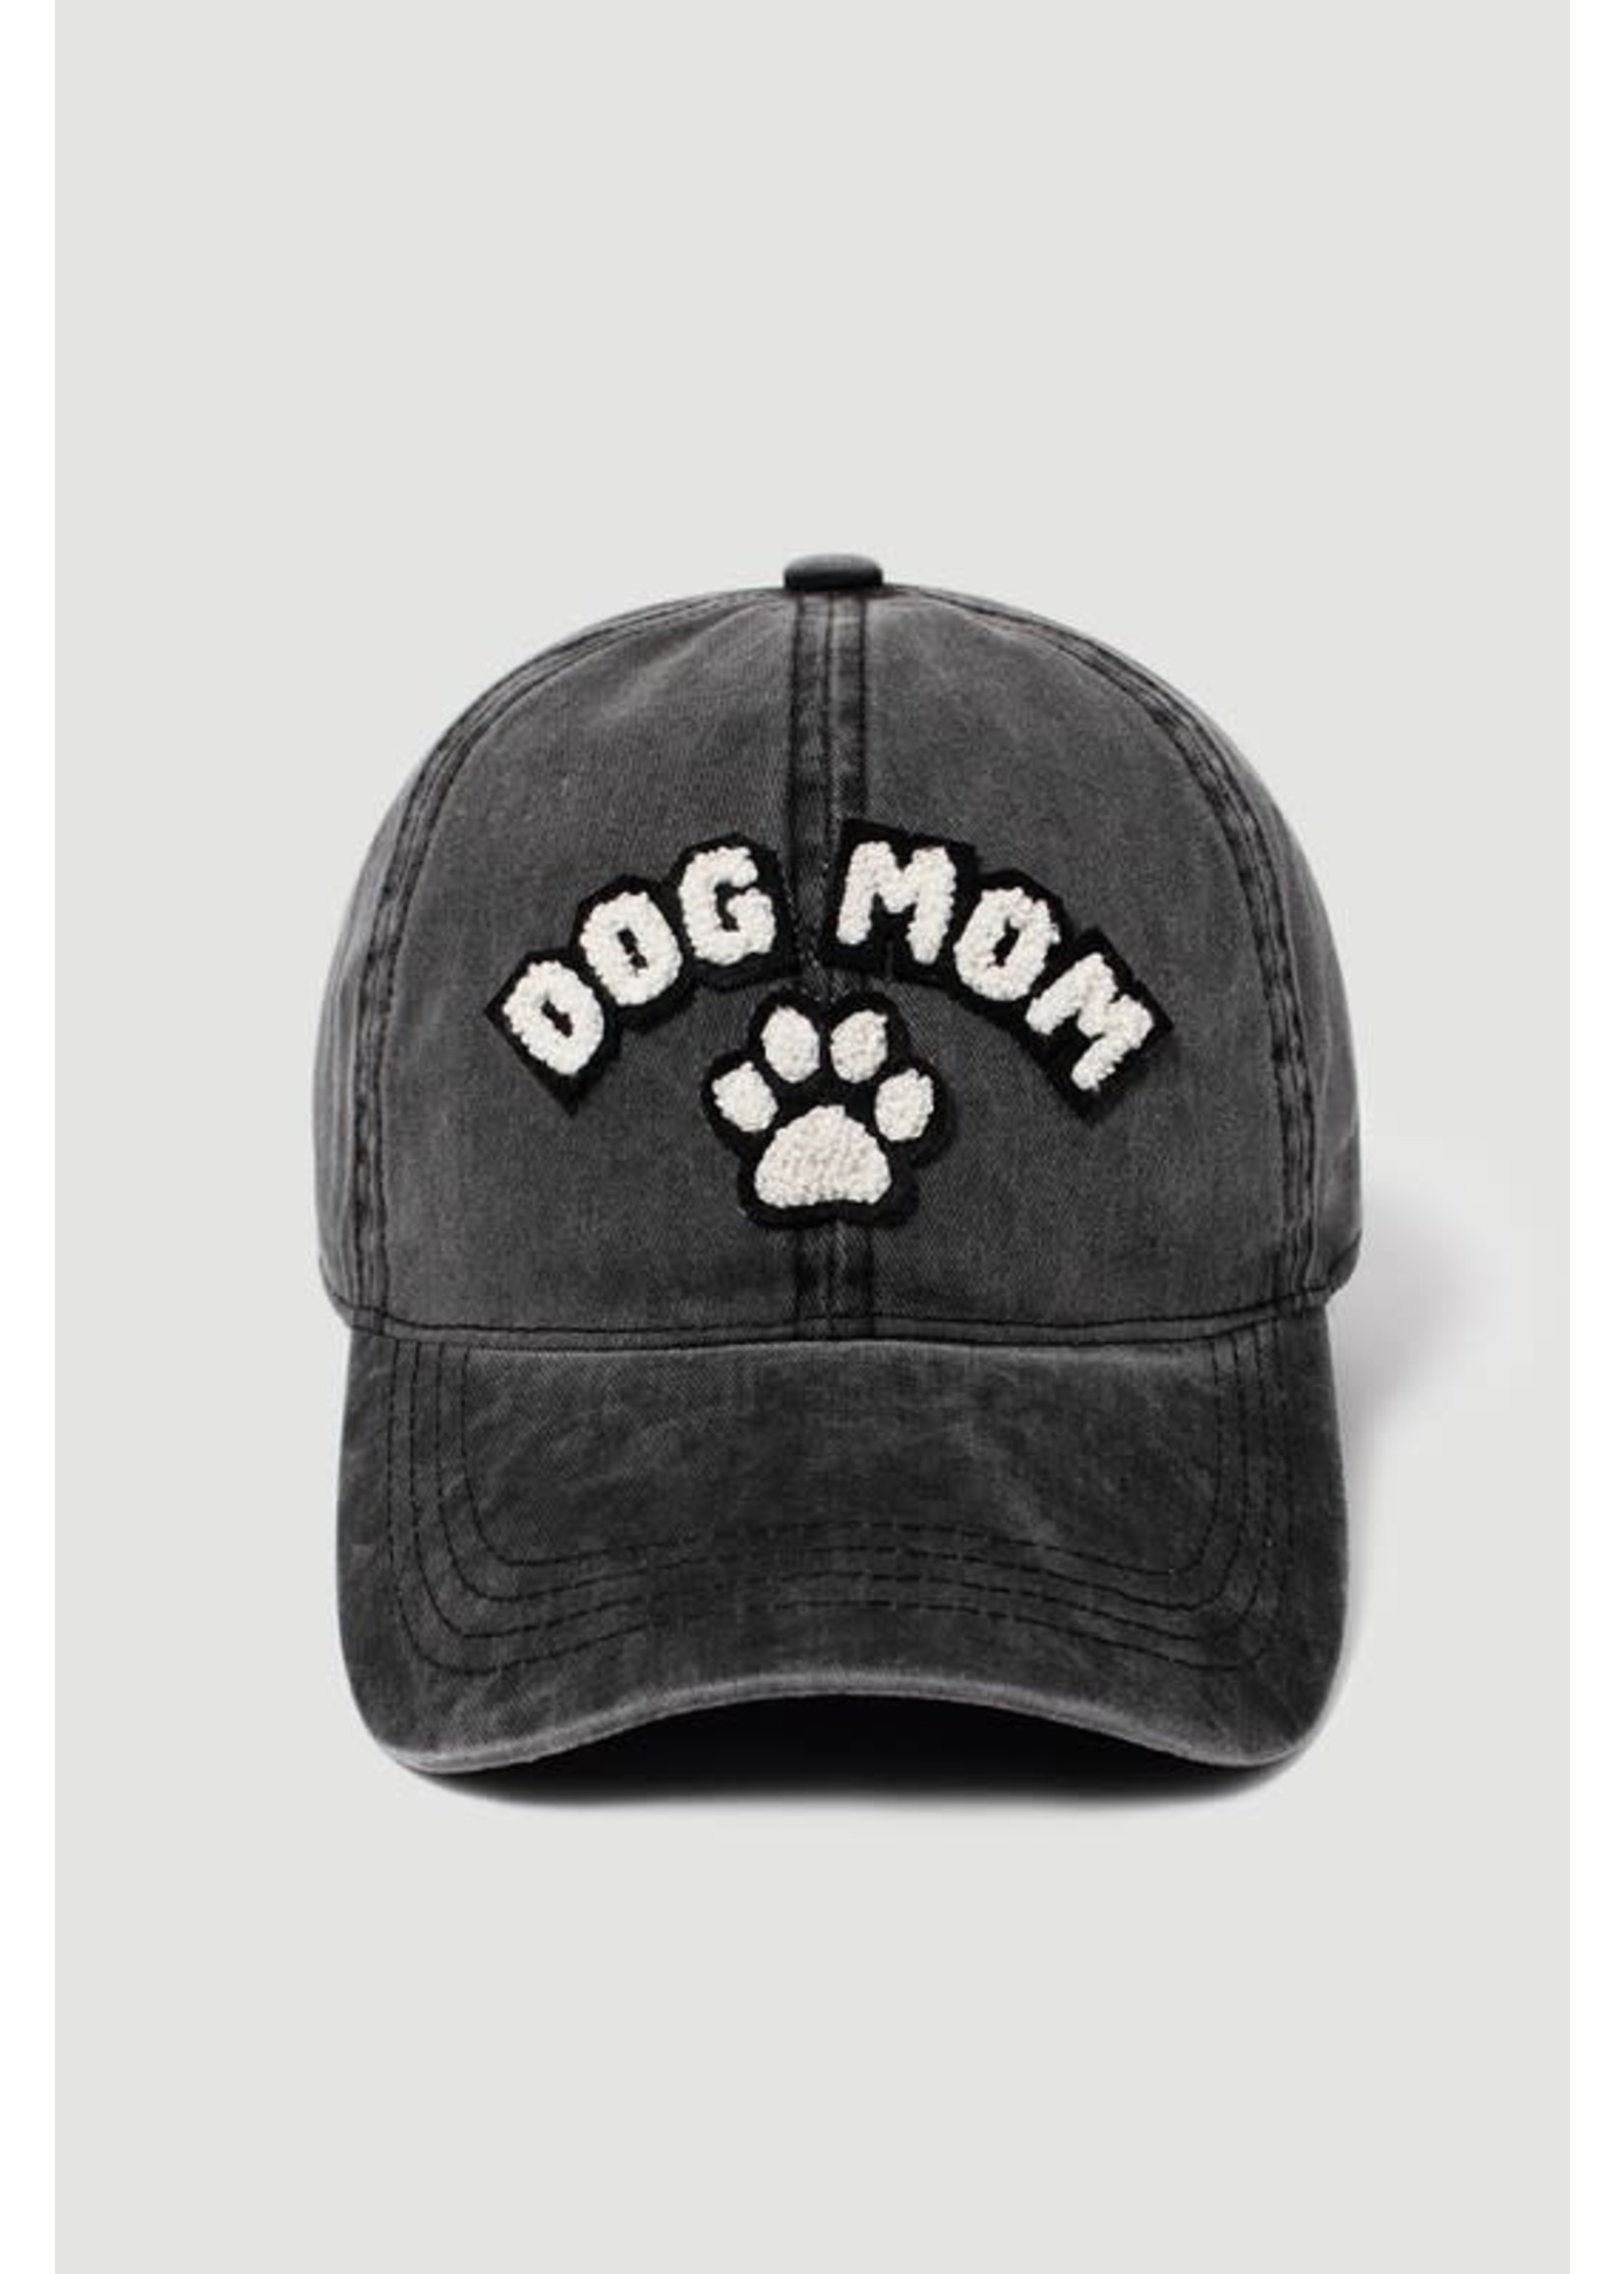 Dog Mom Sherpa Paw Baseball Cap